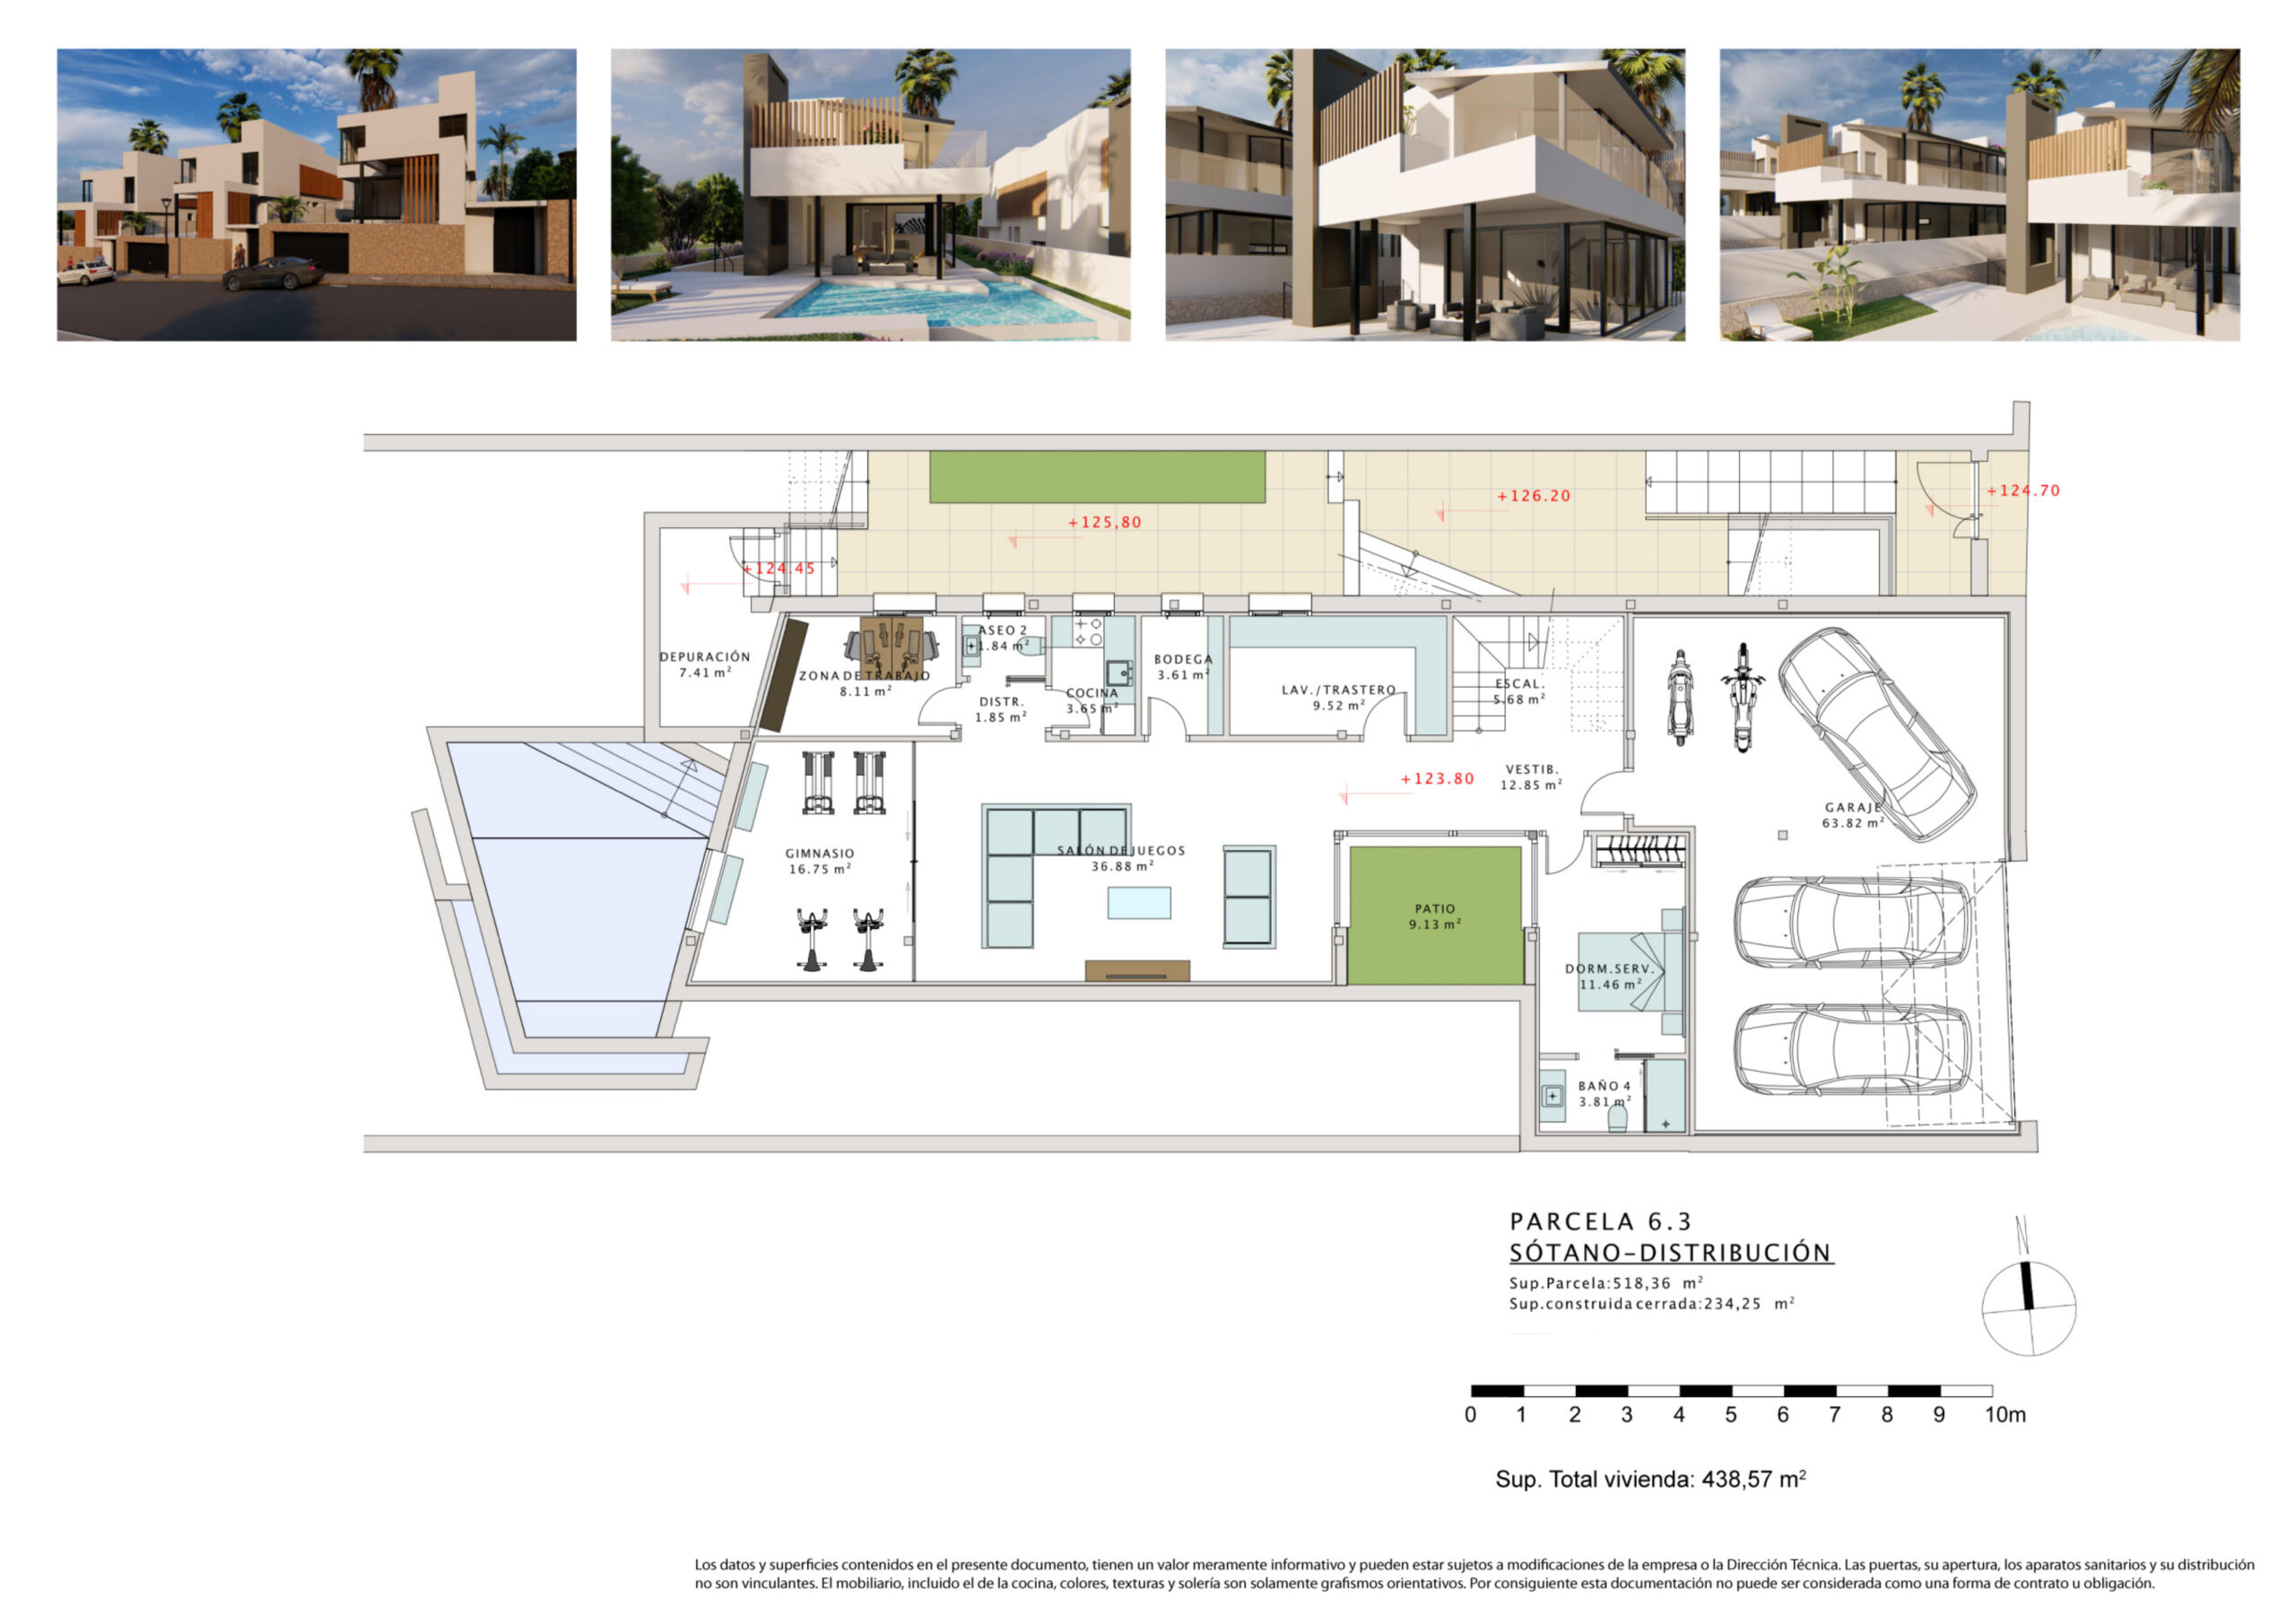 5 bedroom villa floor plan in el higueron new development near malaga